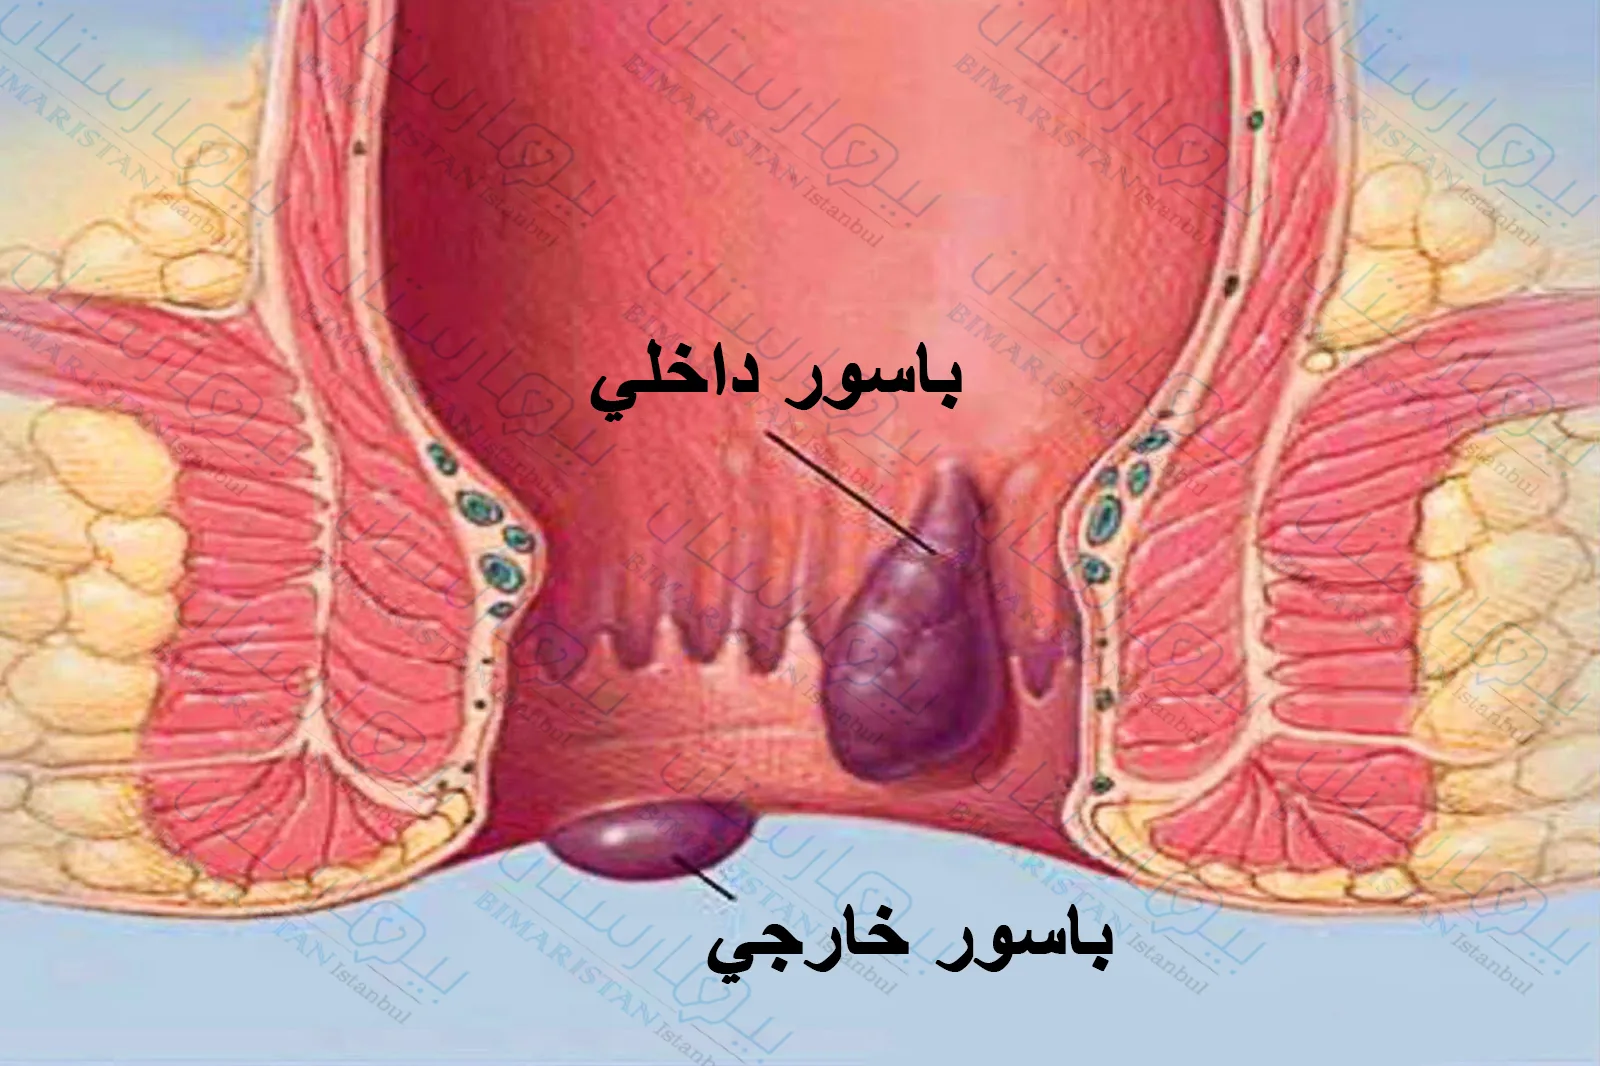 External hemorrhoids form near the anus, while internal hemorrhoids form inside the rectum to the anal tip